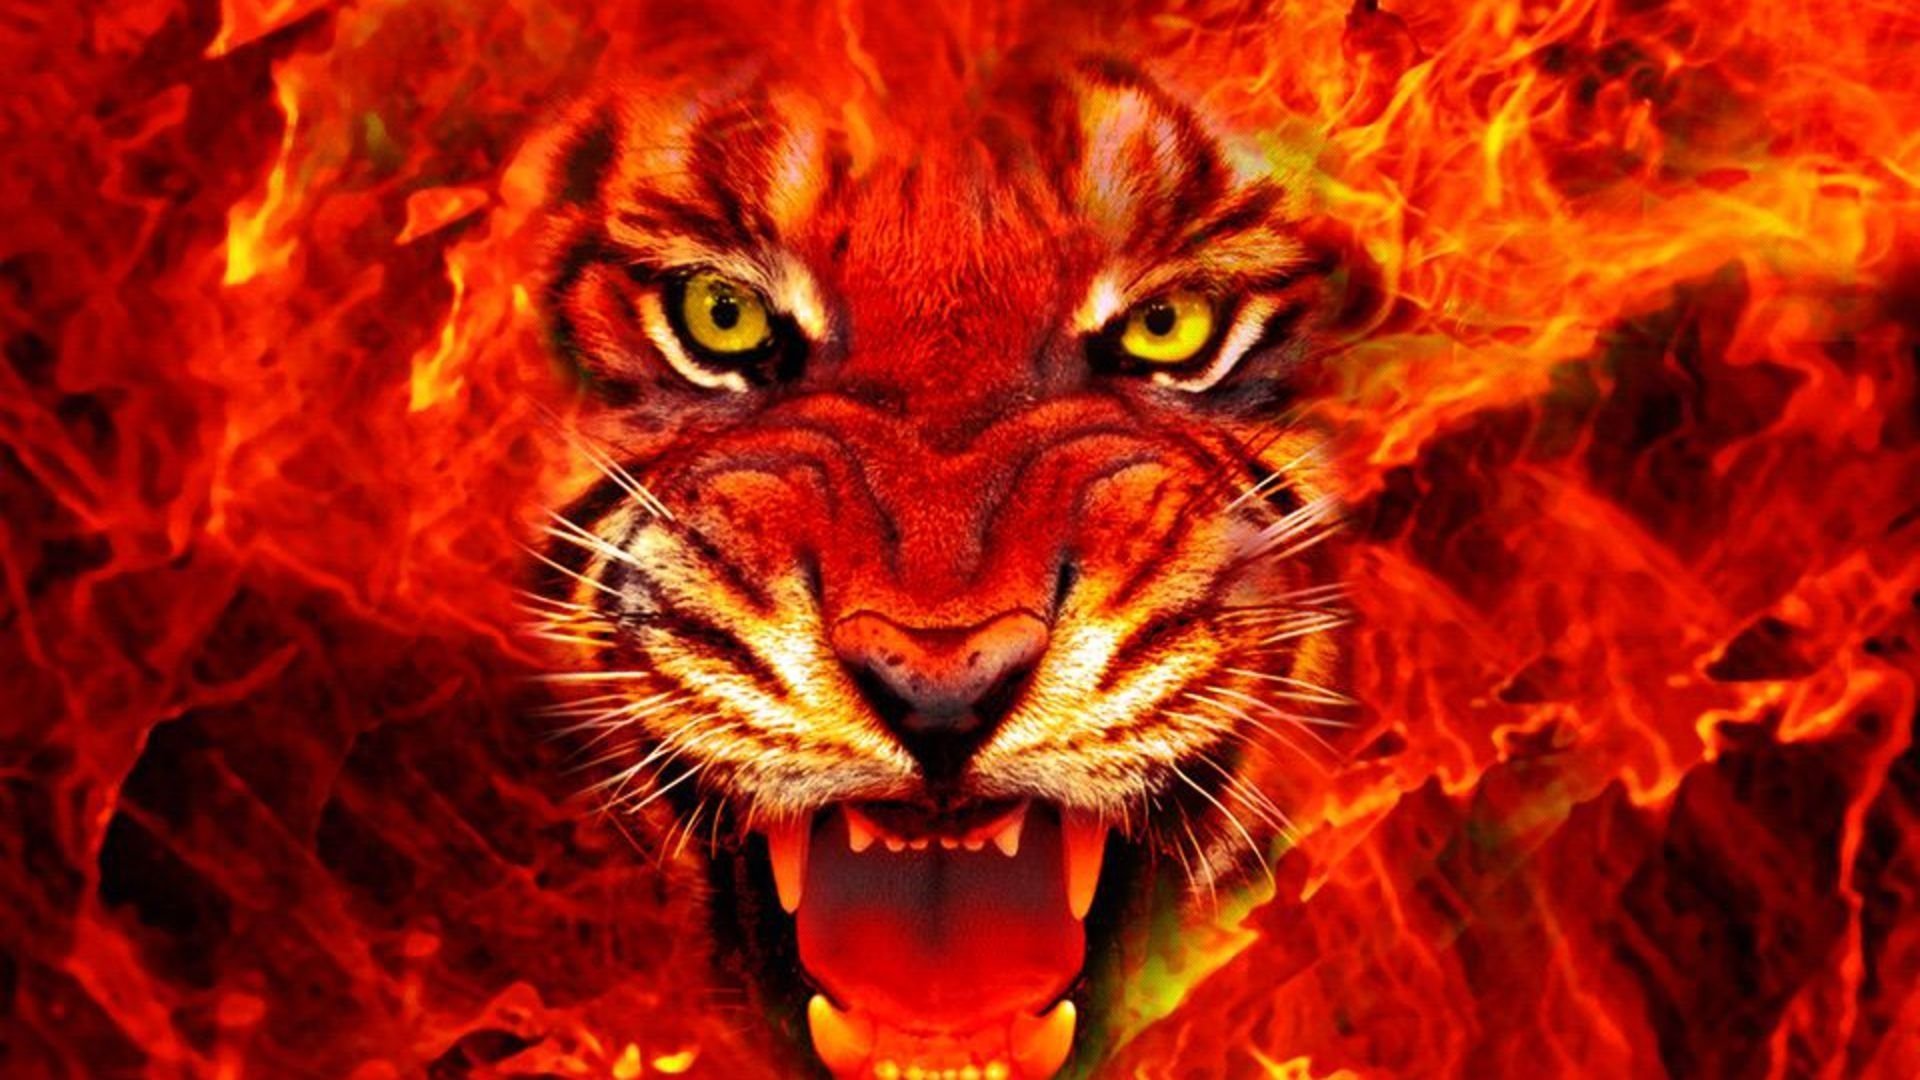 Animal Tiger Face Fire 4k Ultra Hd Wallpapers For Desktop ...